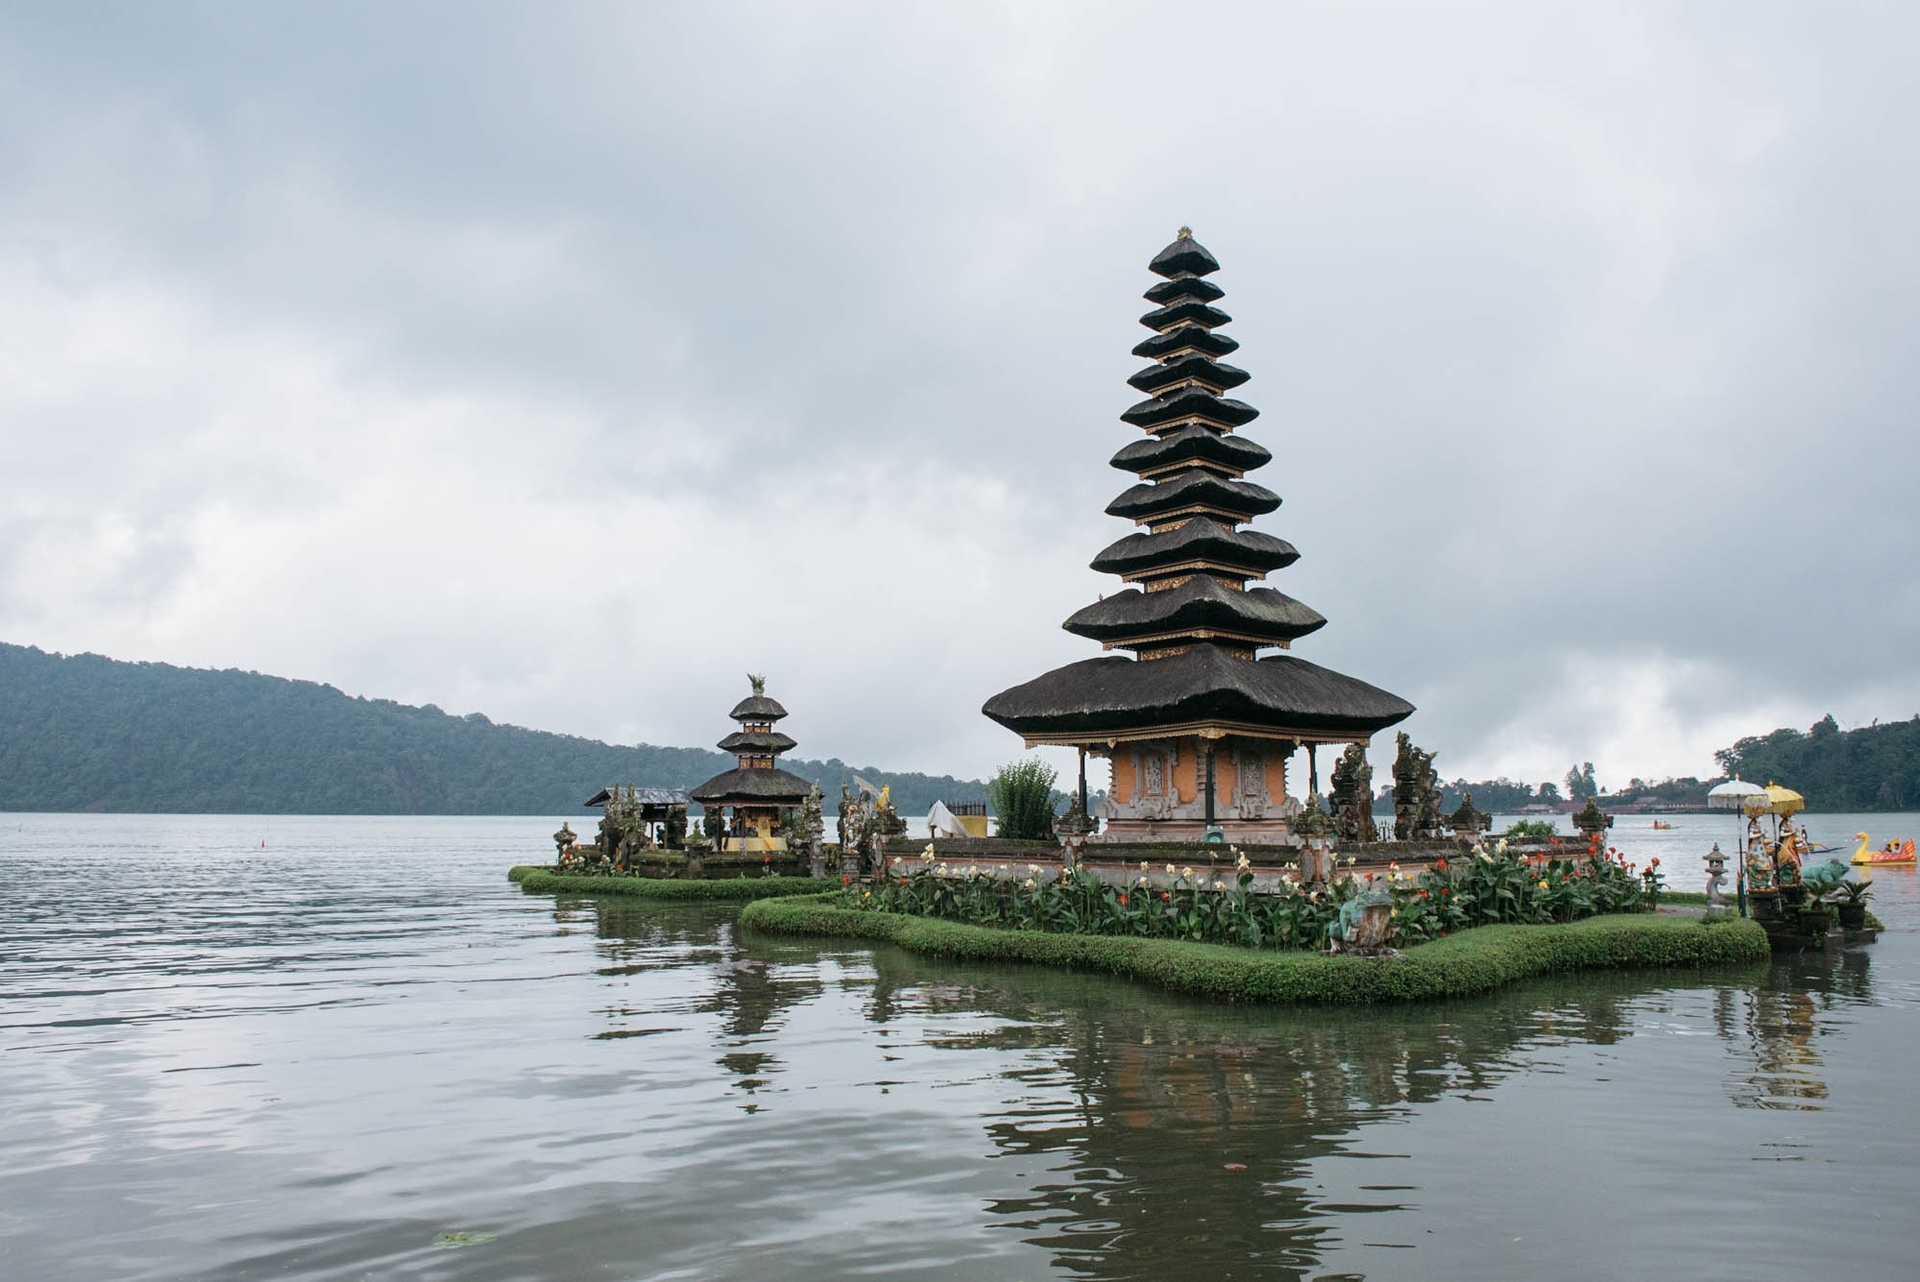 Bali, Indonesia - Mt. Batur, Temples, and Rice Terraces